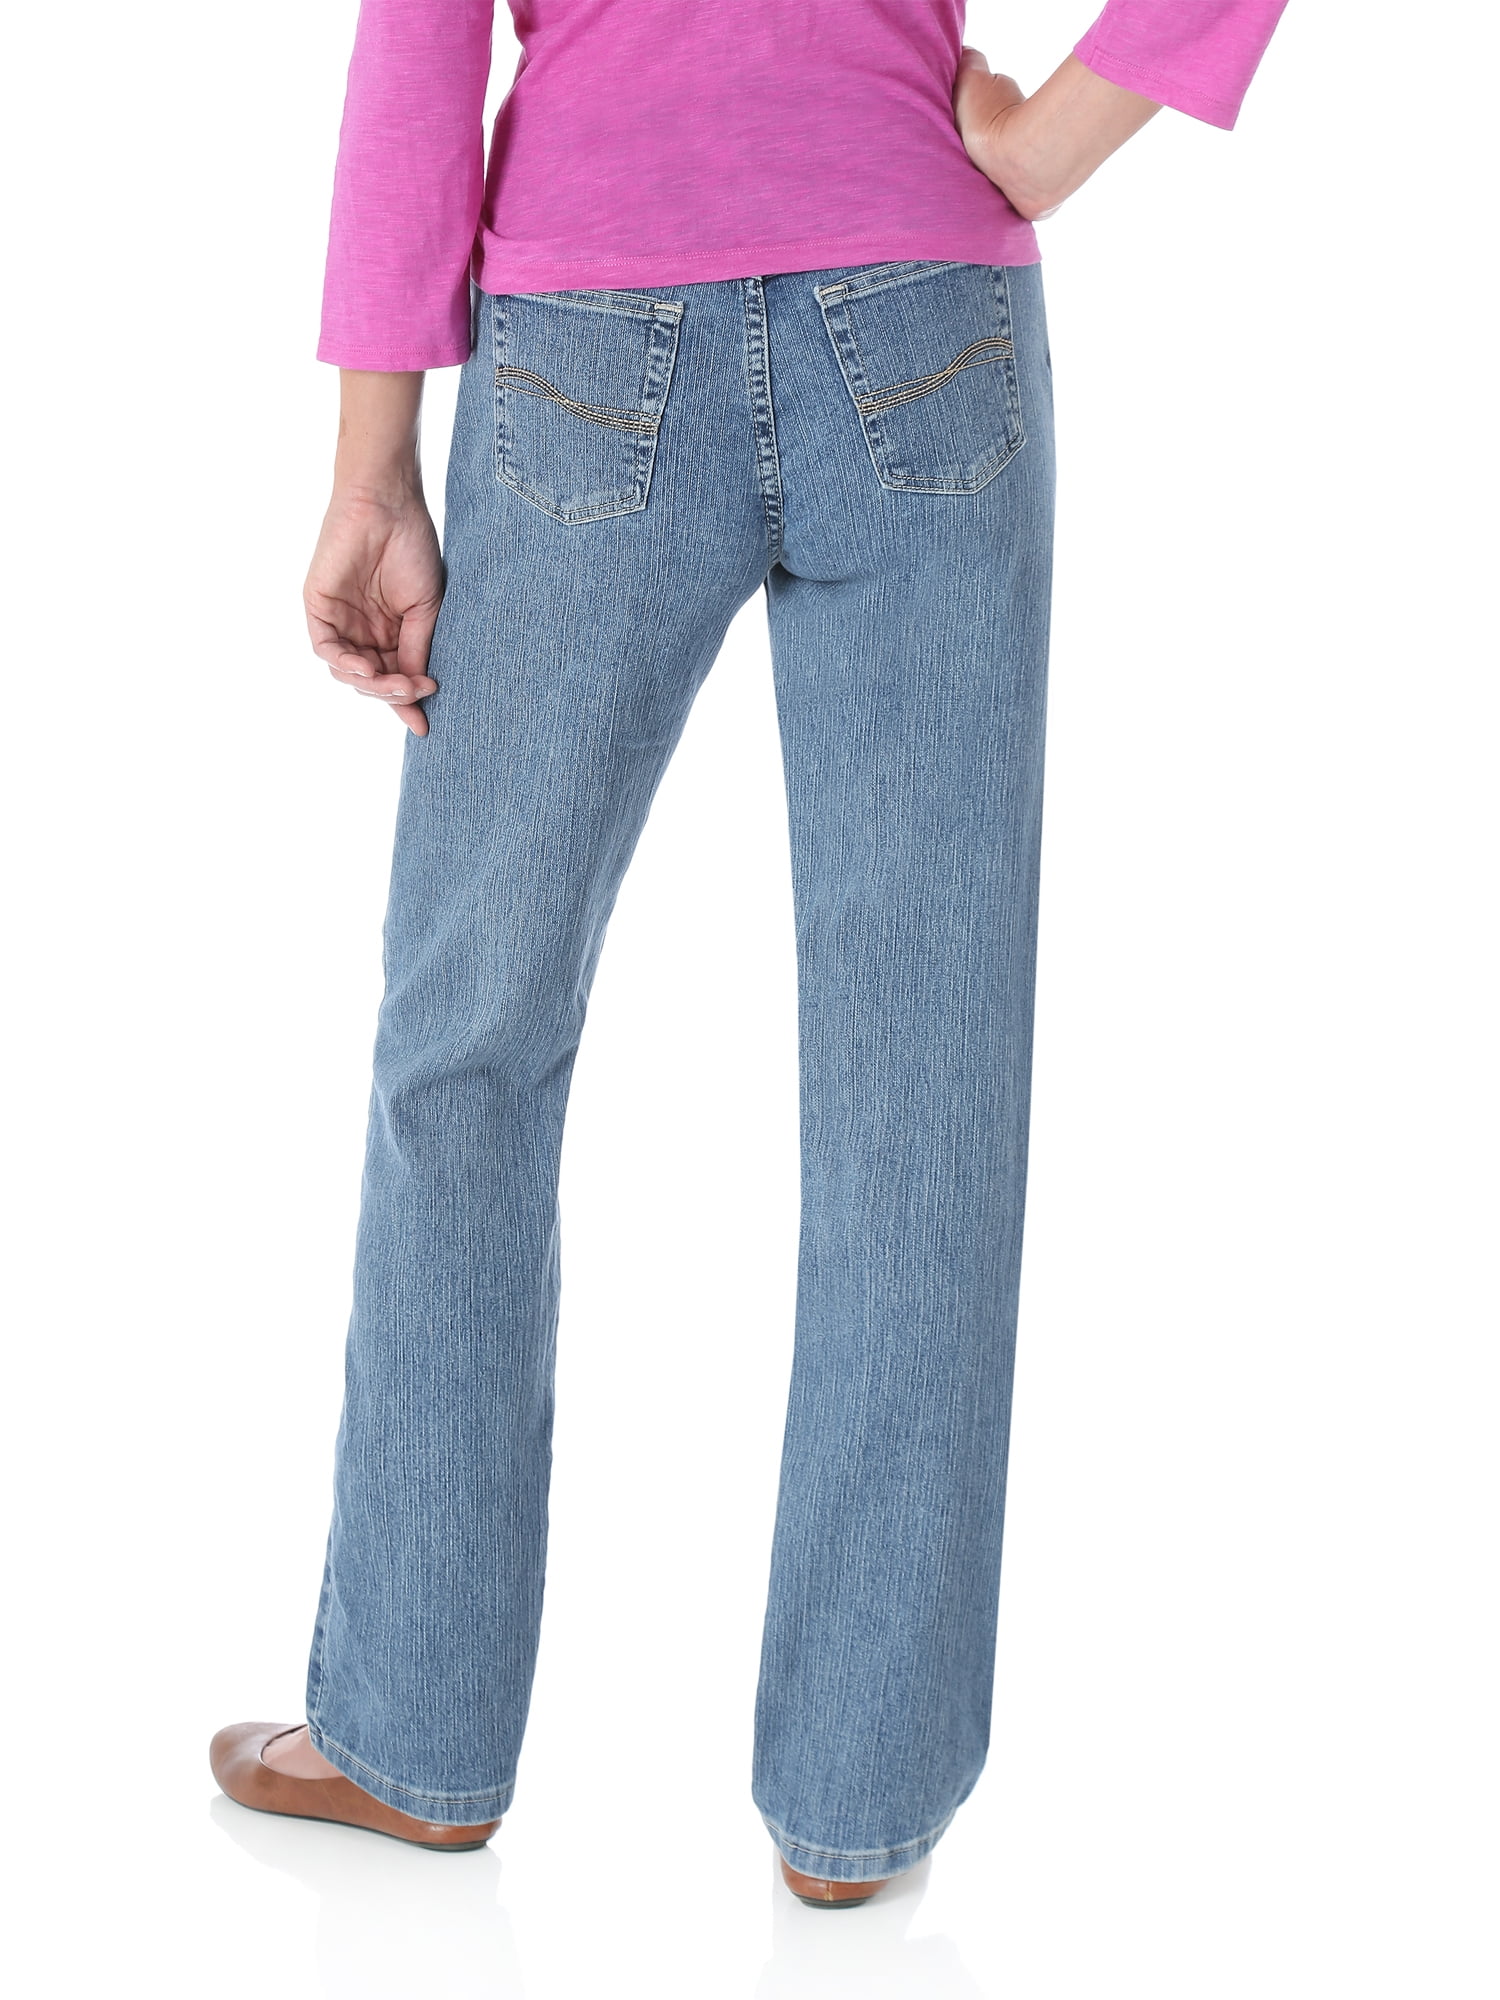 Lee Jeans Plus Size Chart